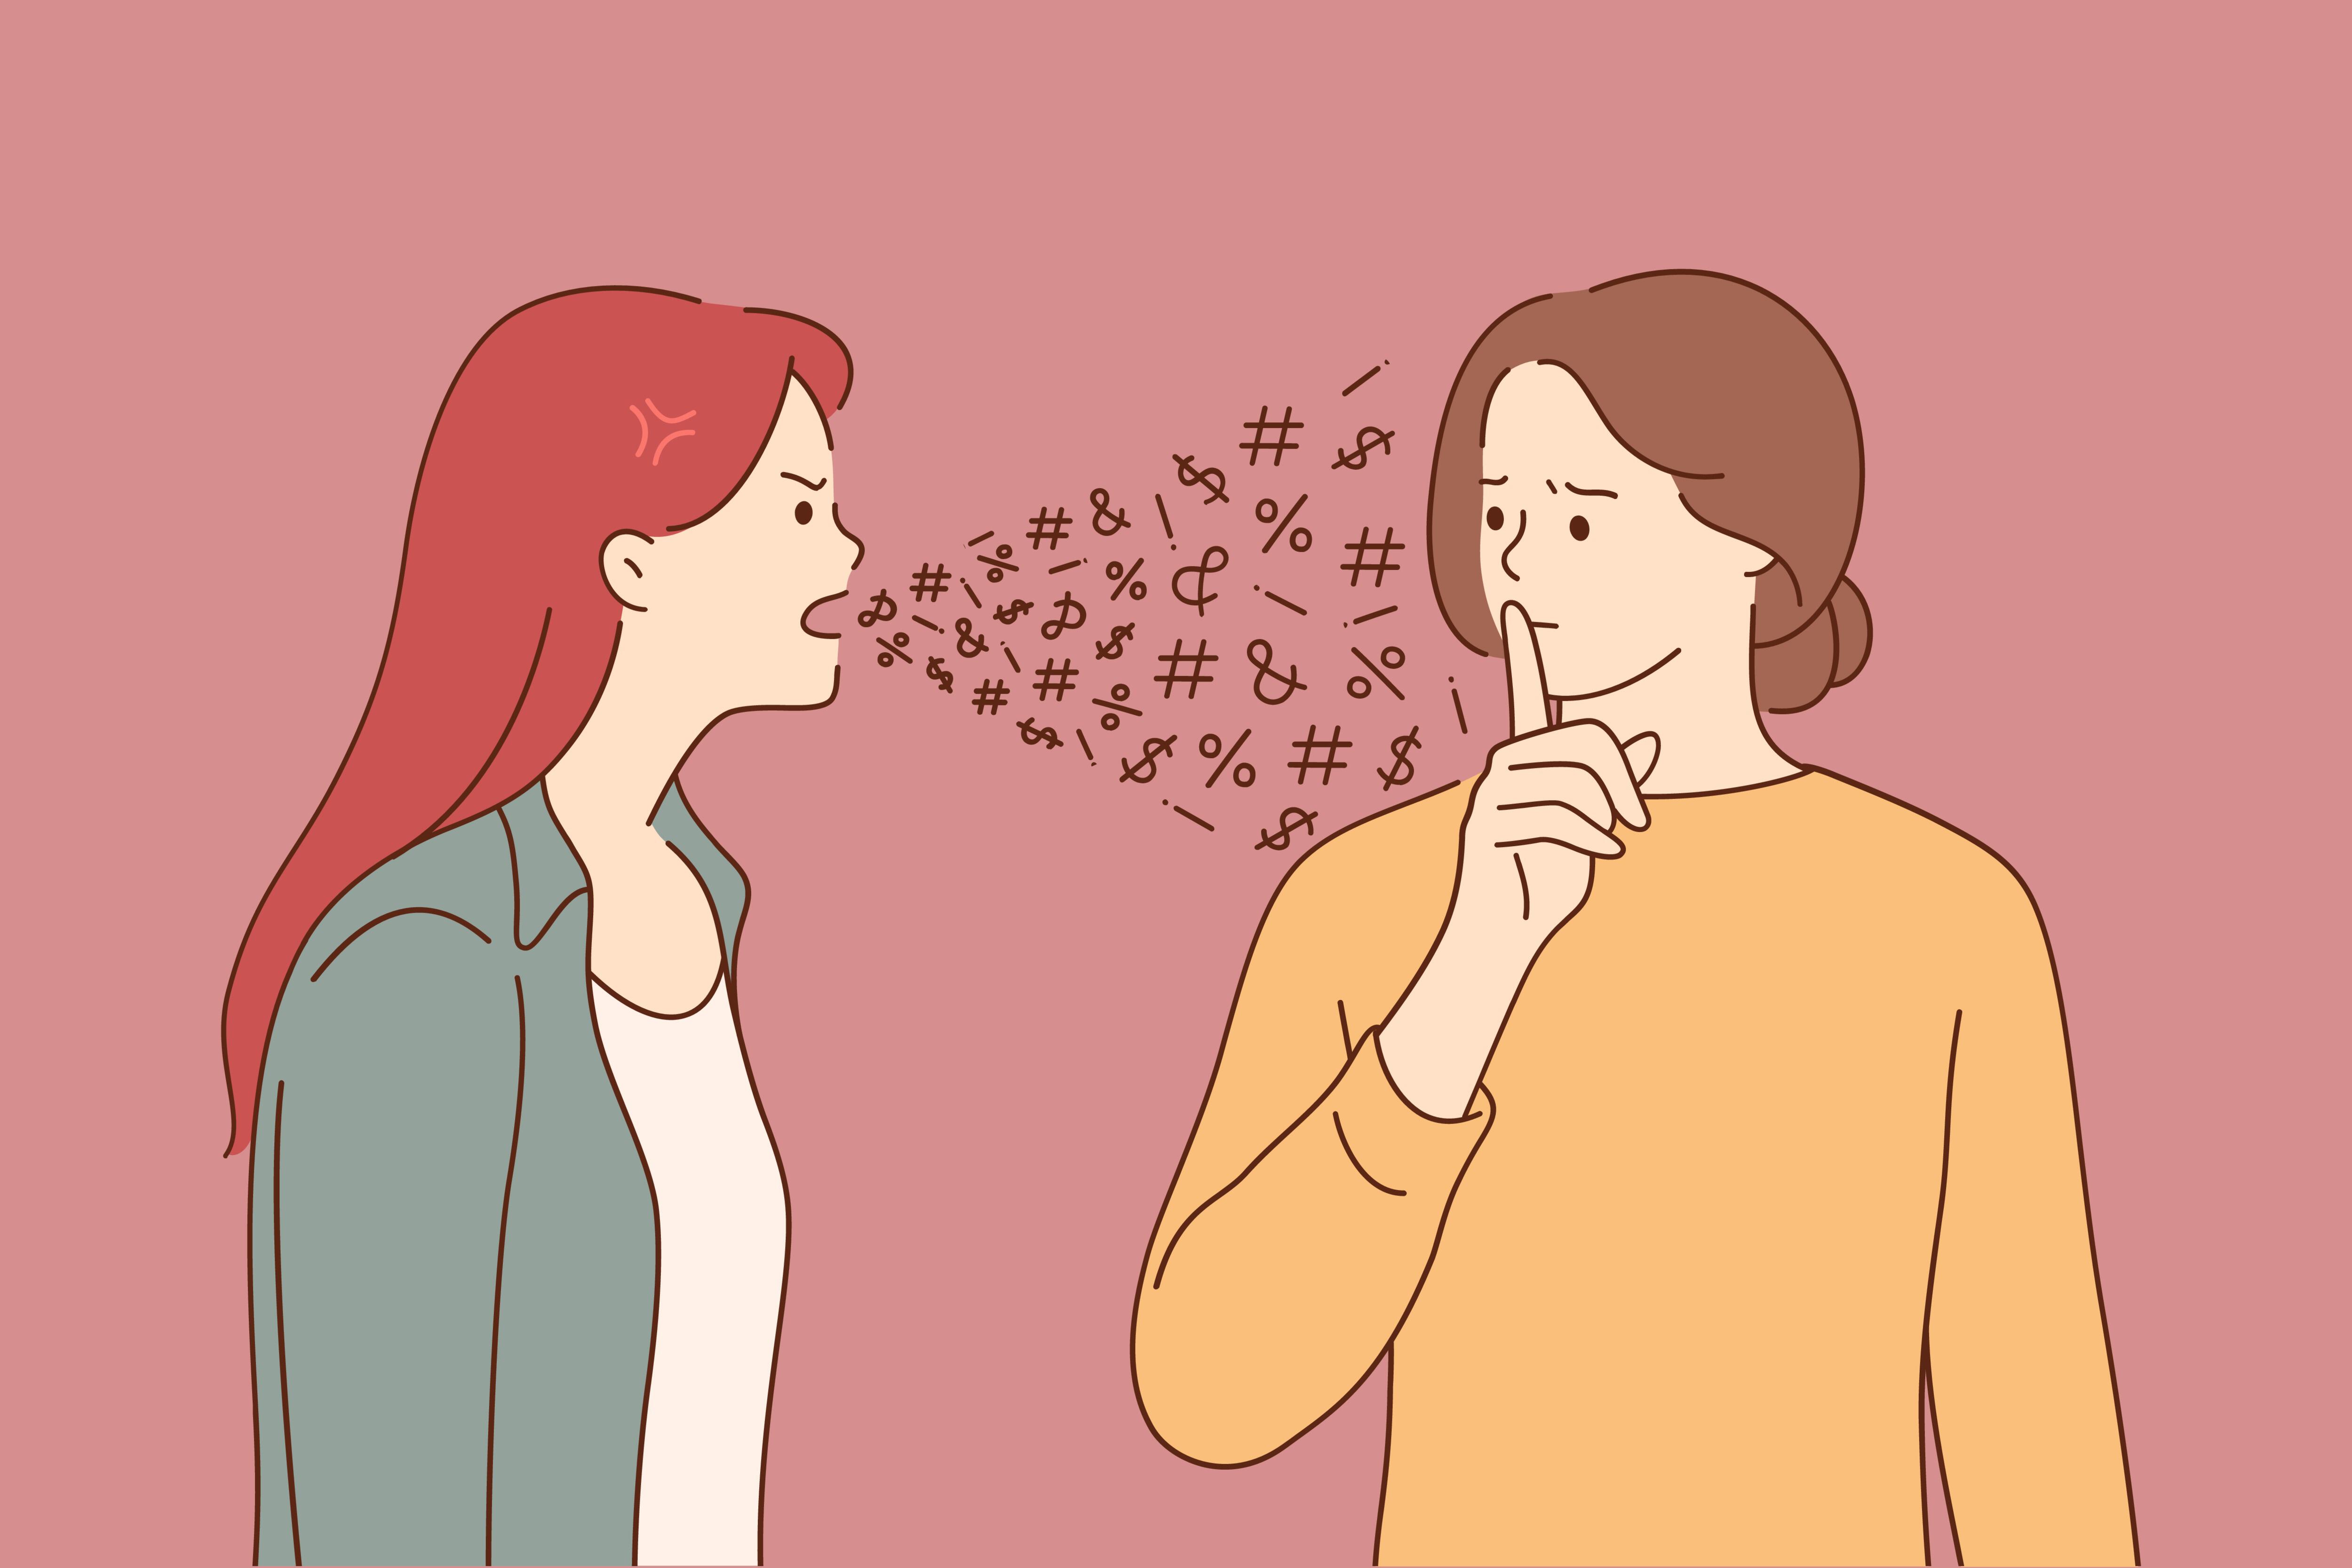 Illustration of talkative woman